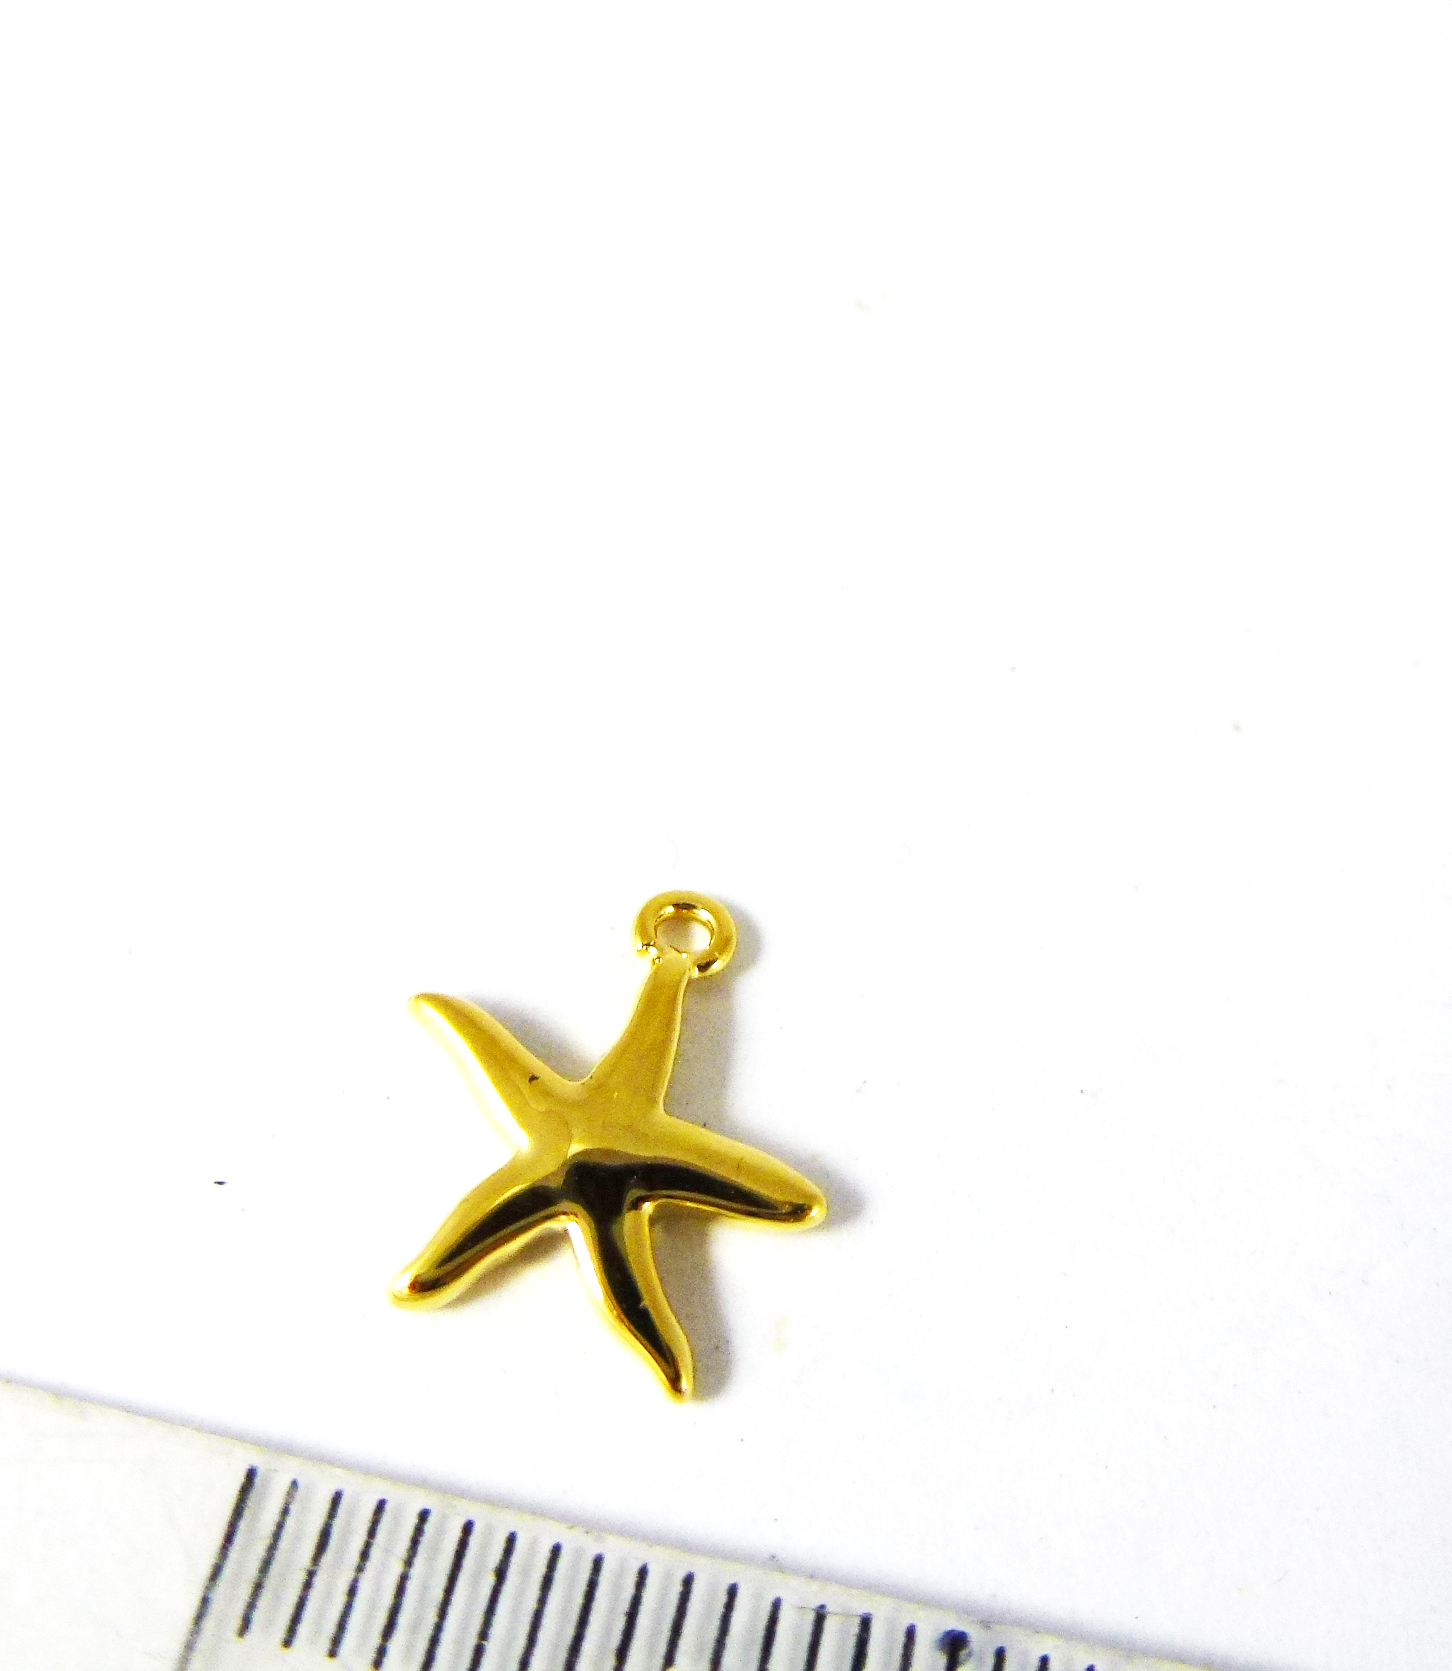 10mm銅鍍金色單孔海星